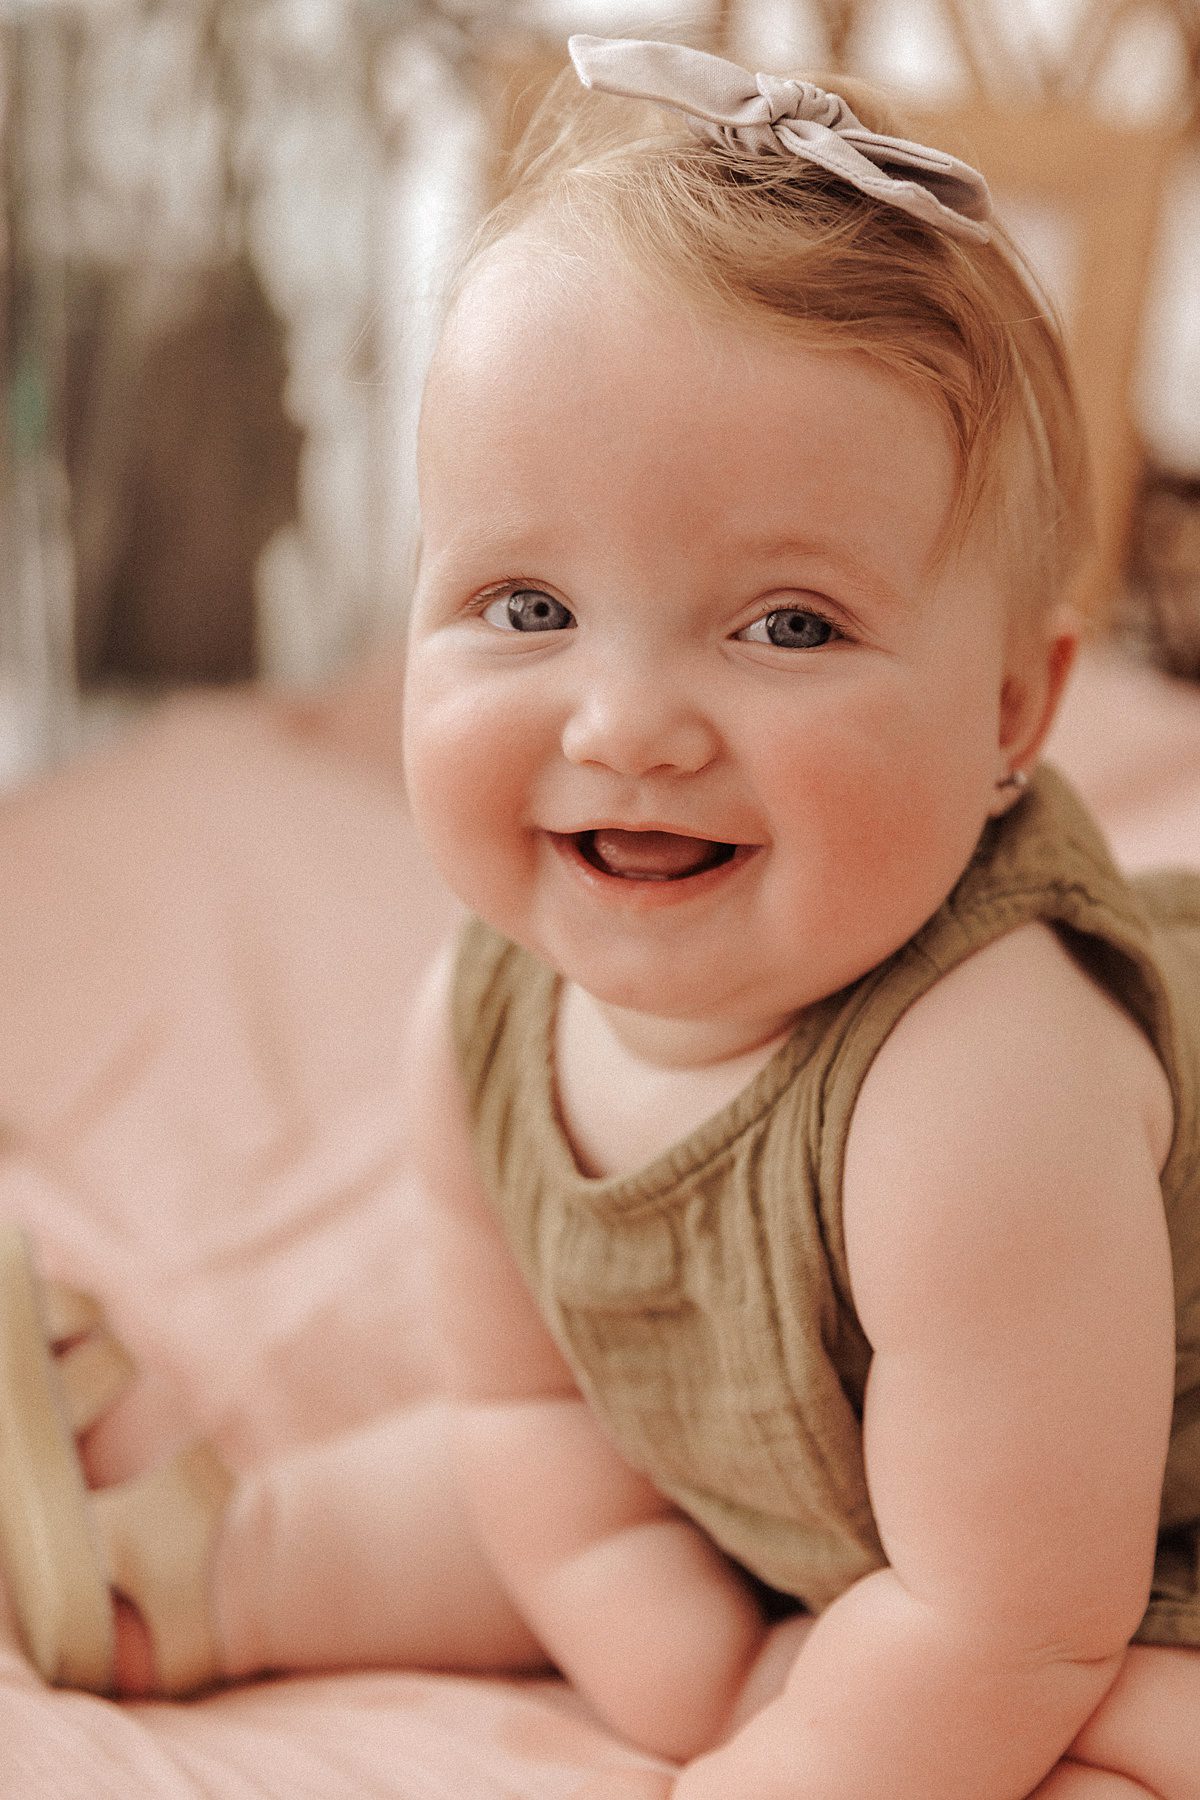 Blue eyed baby girl smiling